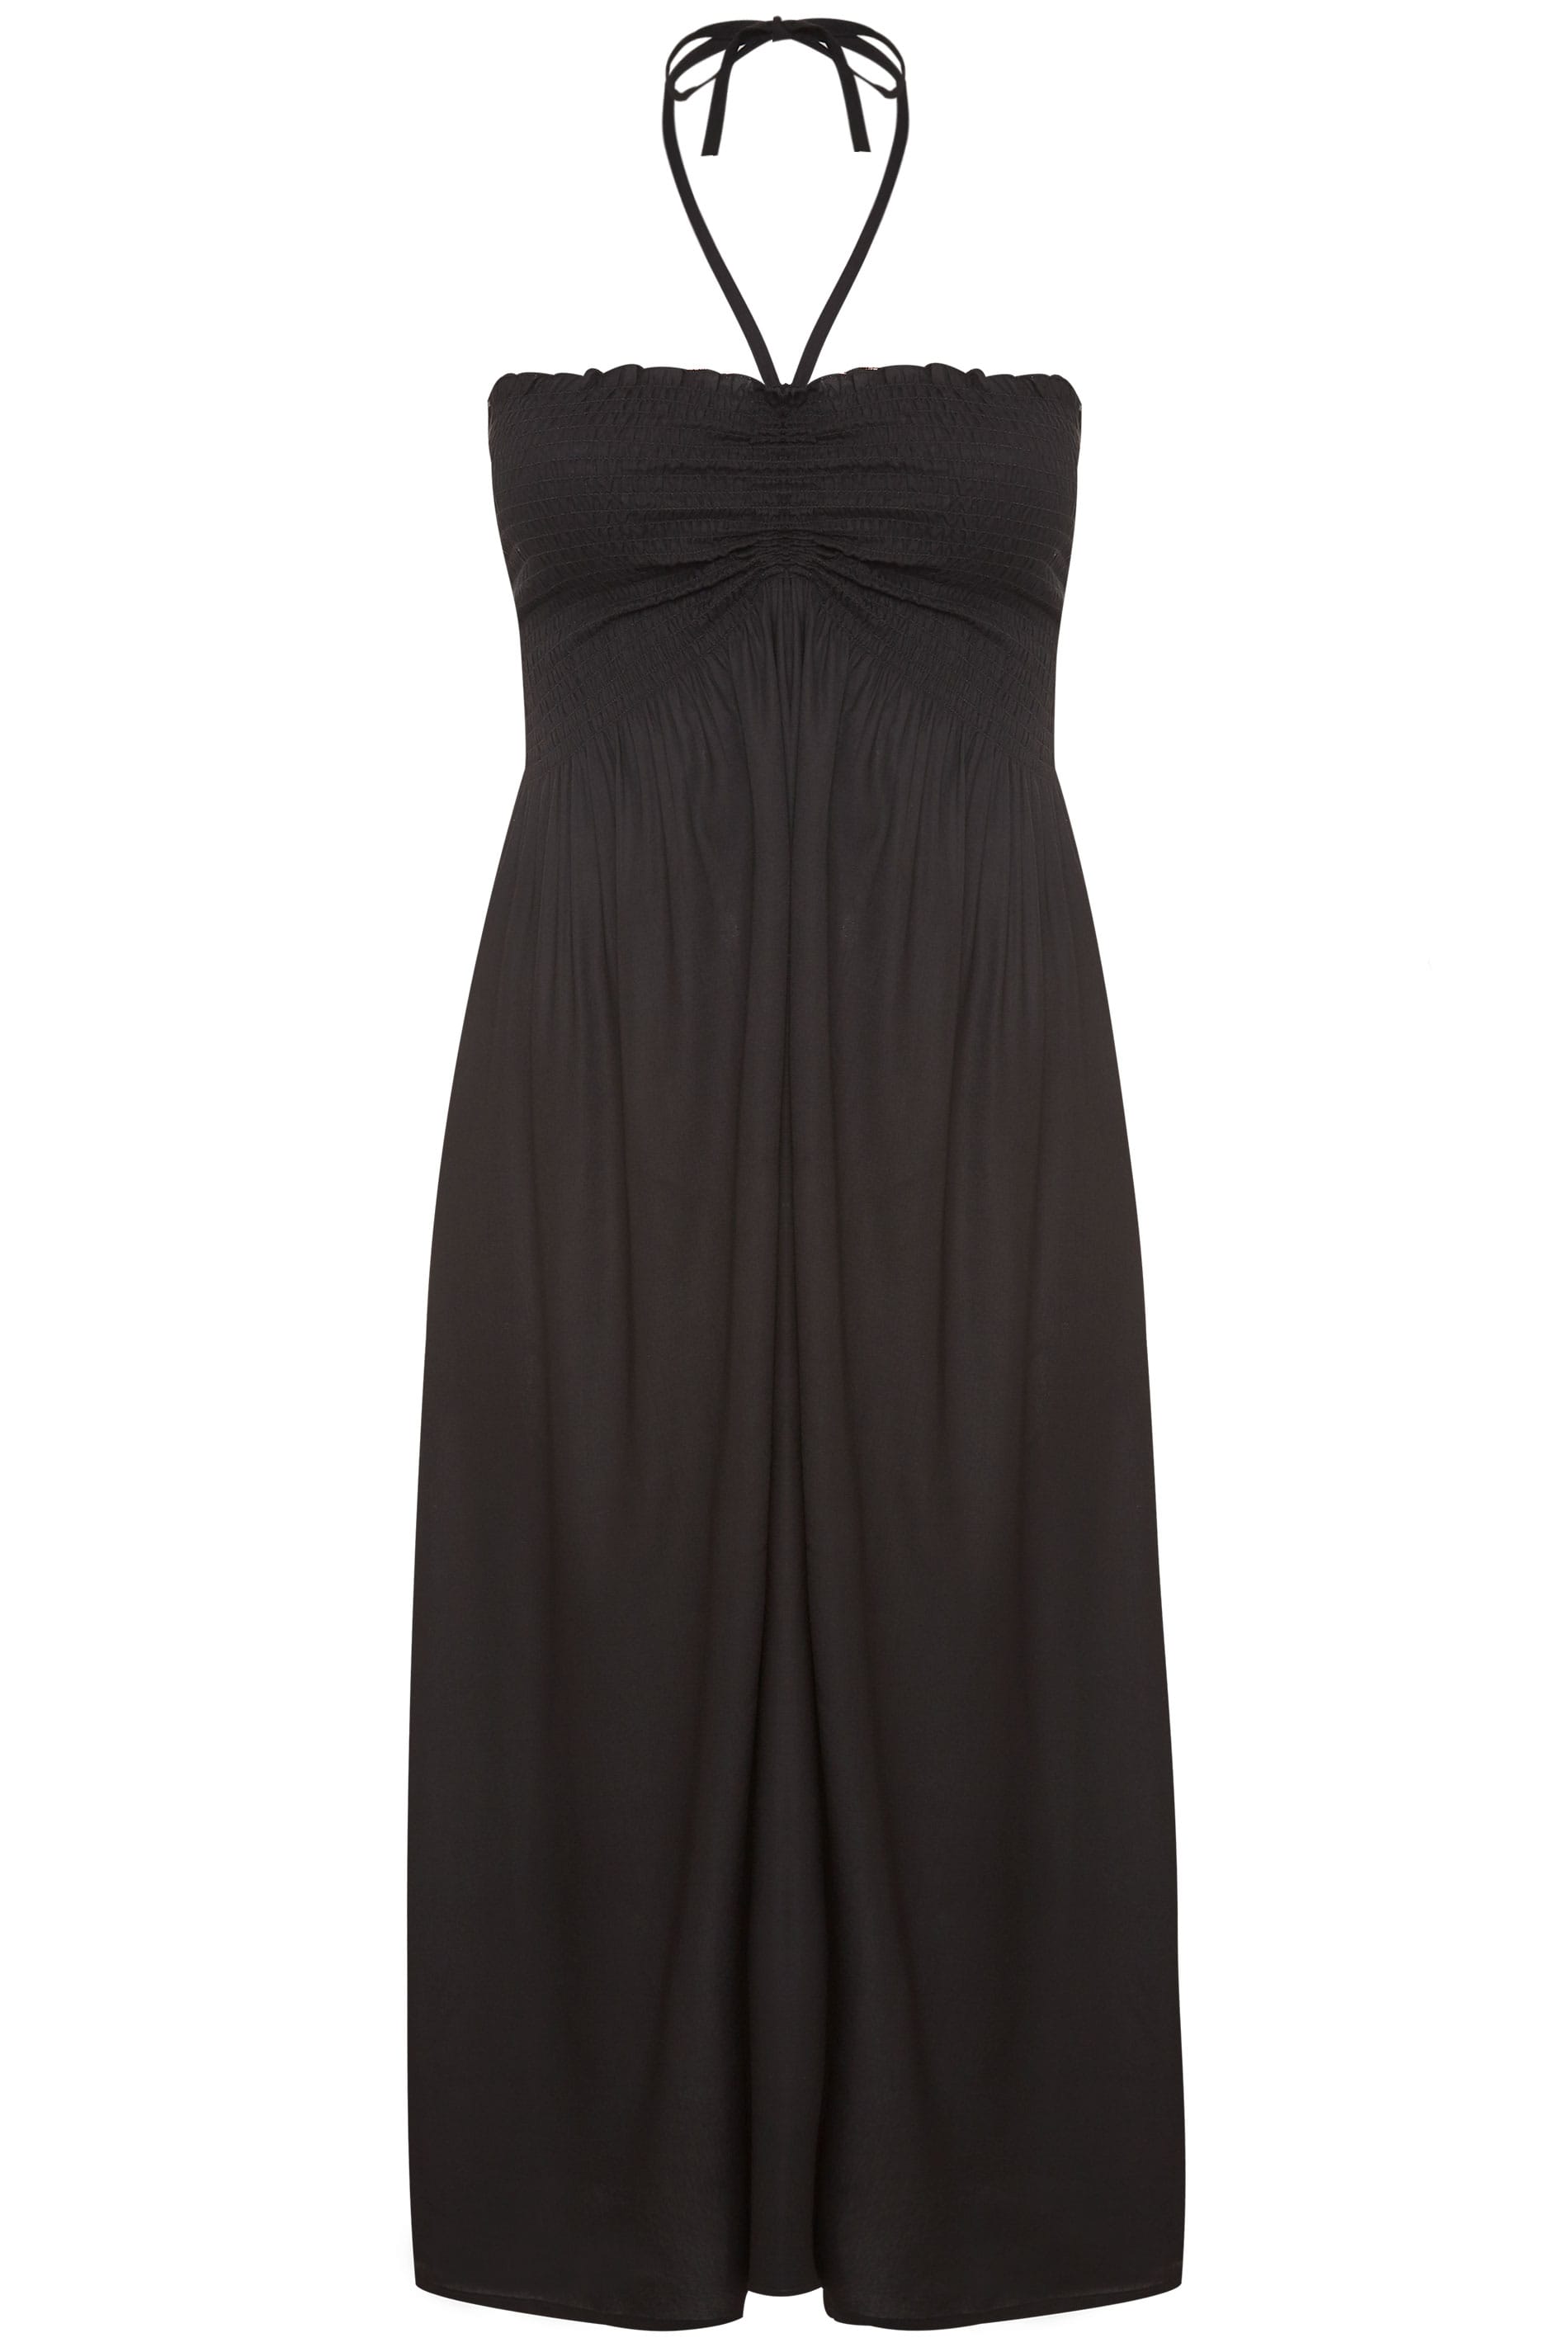 Black Shirred Halterneck Midi Dress | Yours Clothing